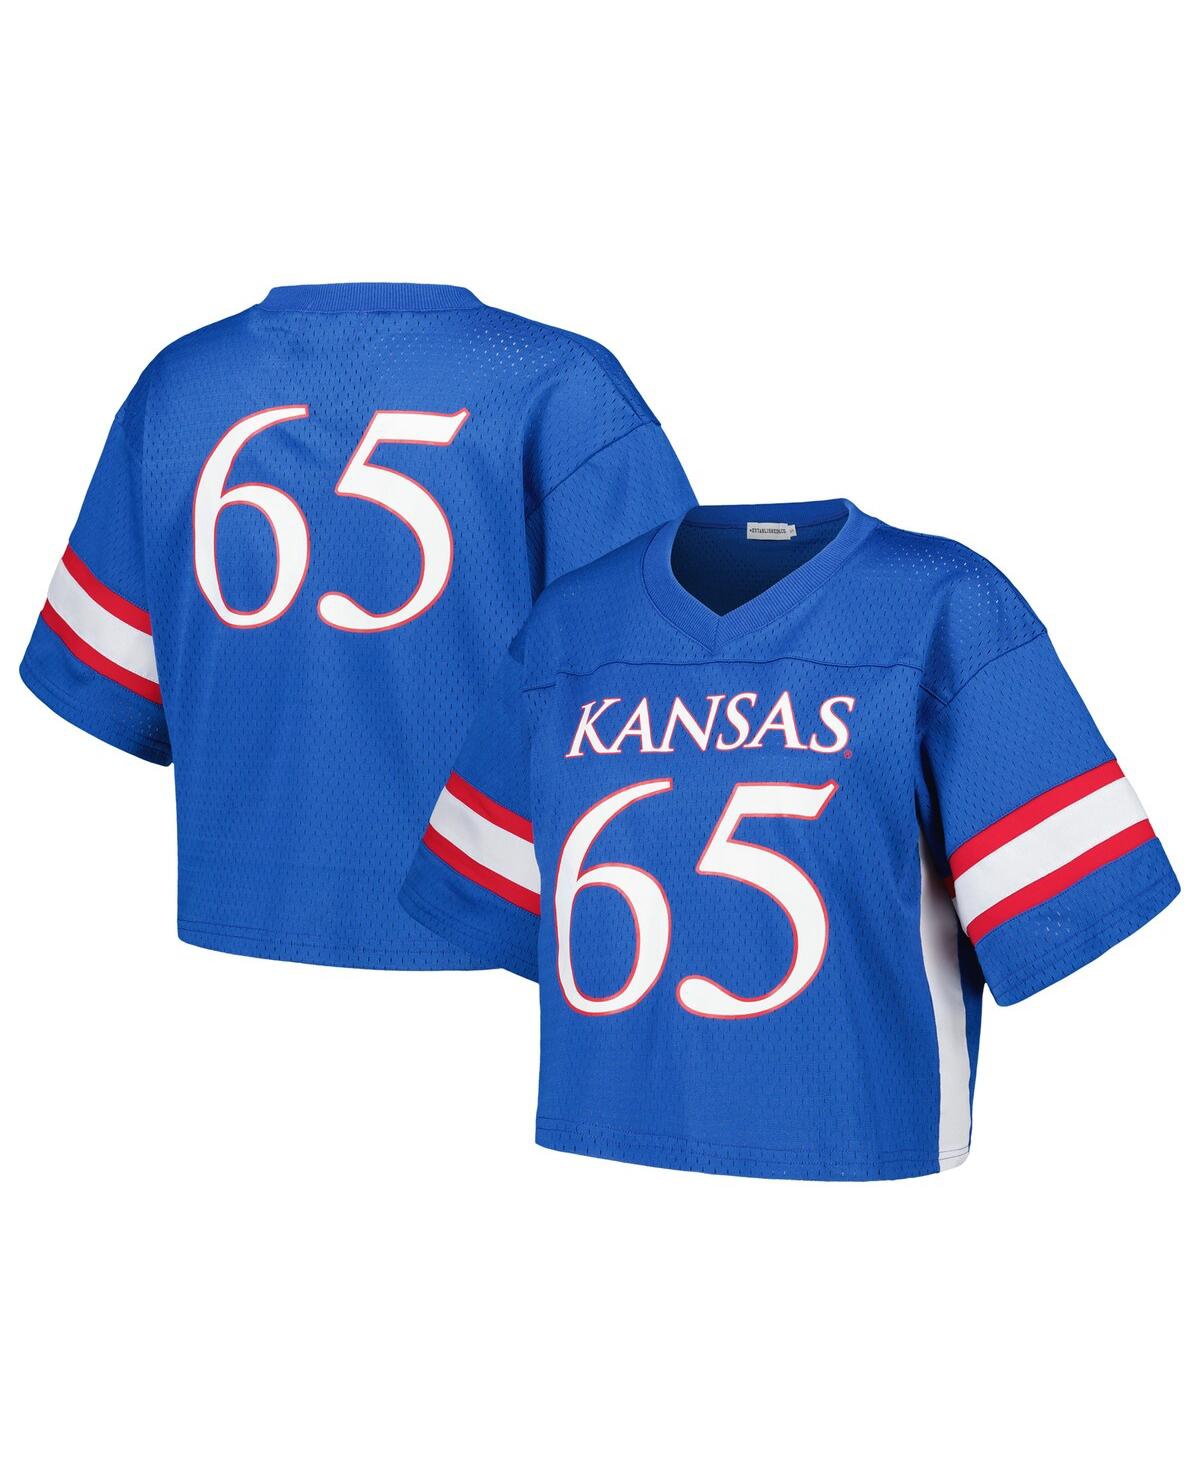 Women's Established & Co. #65 Royal Kansas Jayhawks Fashion Boxy Cropped Football Jersey - Royal